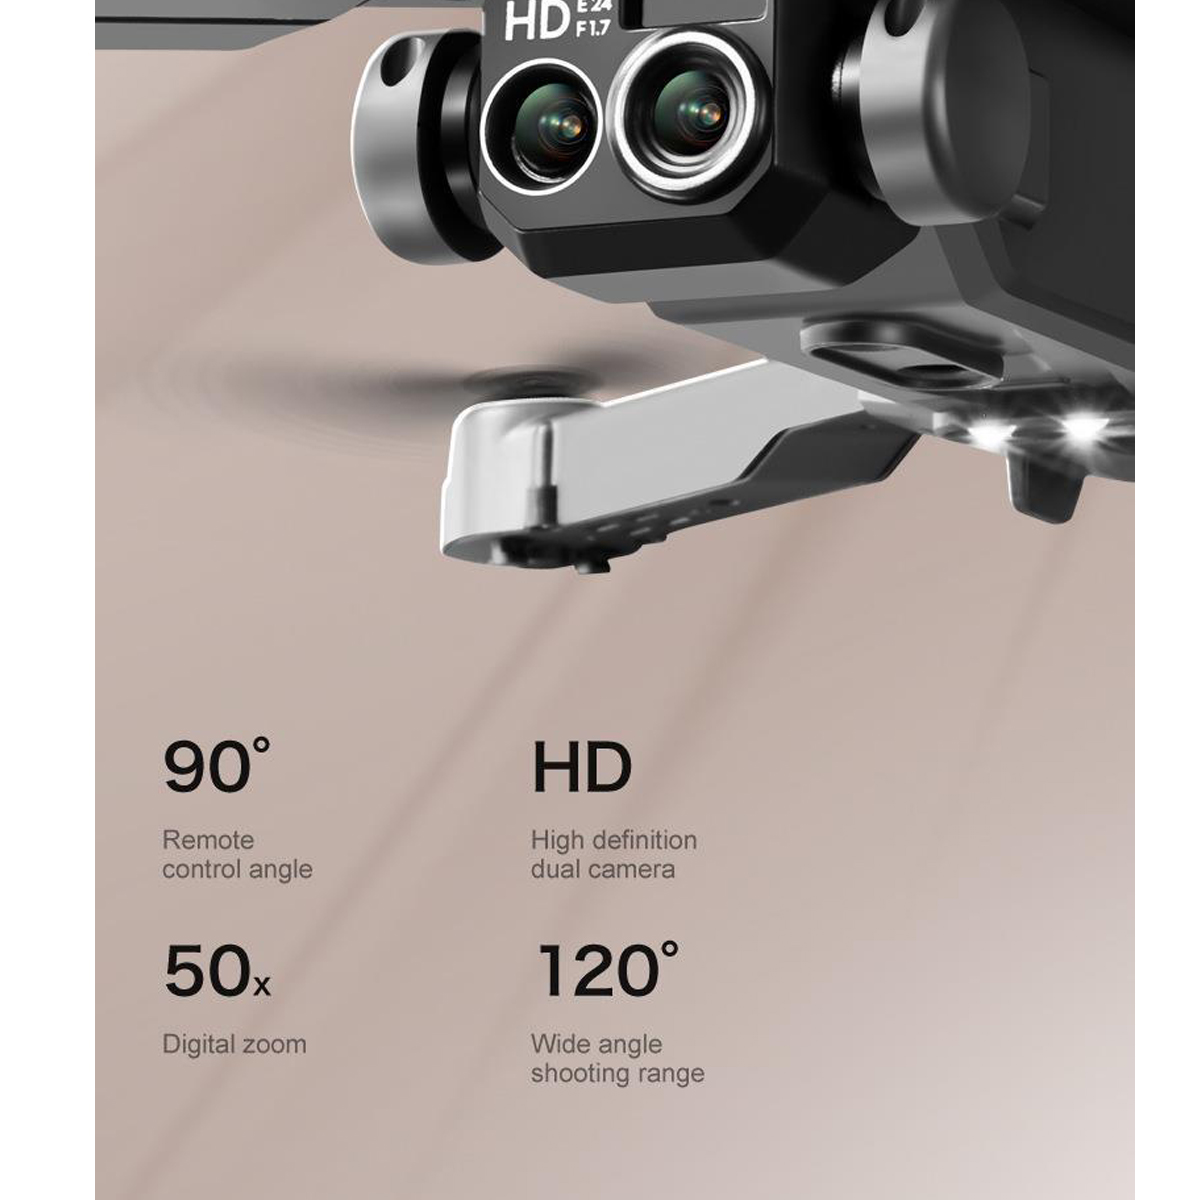 HD-Luftbildaufnahmen ESC Fluss BYTELIKE Drohne grau RC-Flugzeug optischer Hindernisvermeidung Drohne,